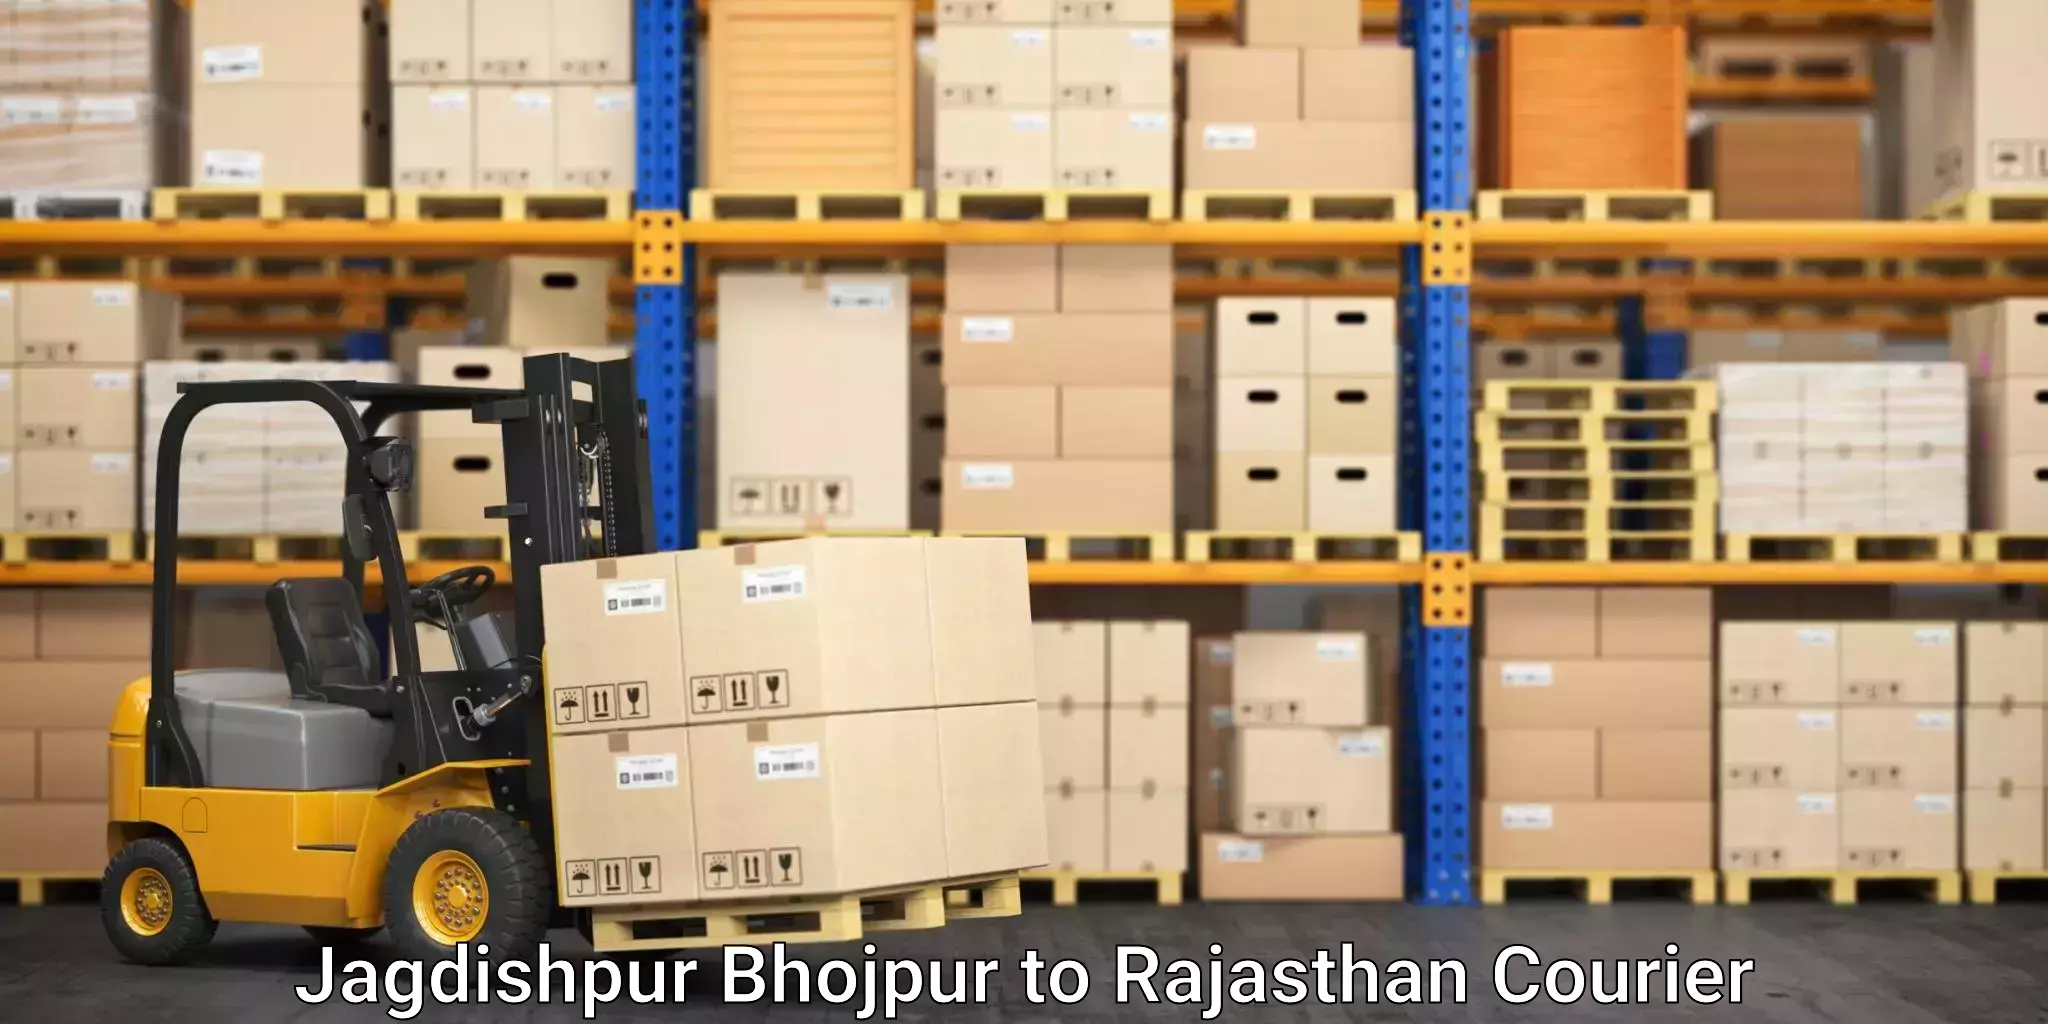 Furniture transport company Jagdishpur Bhojpur to Udaipurwati